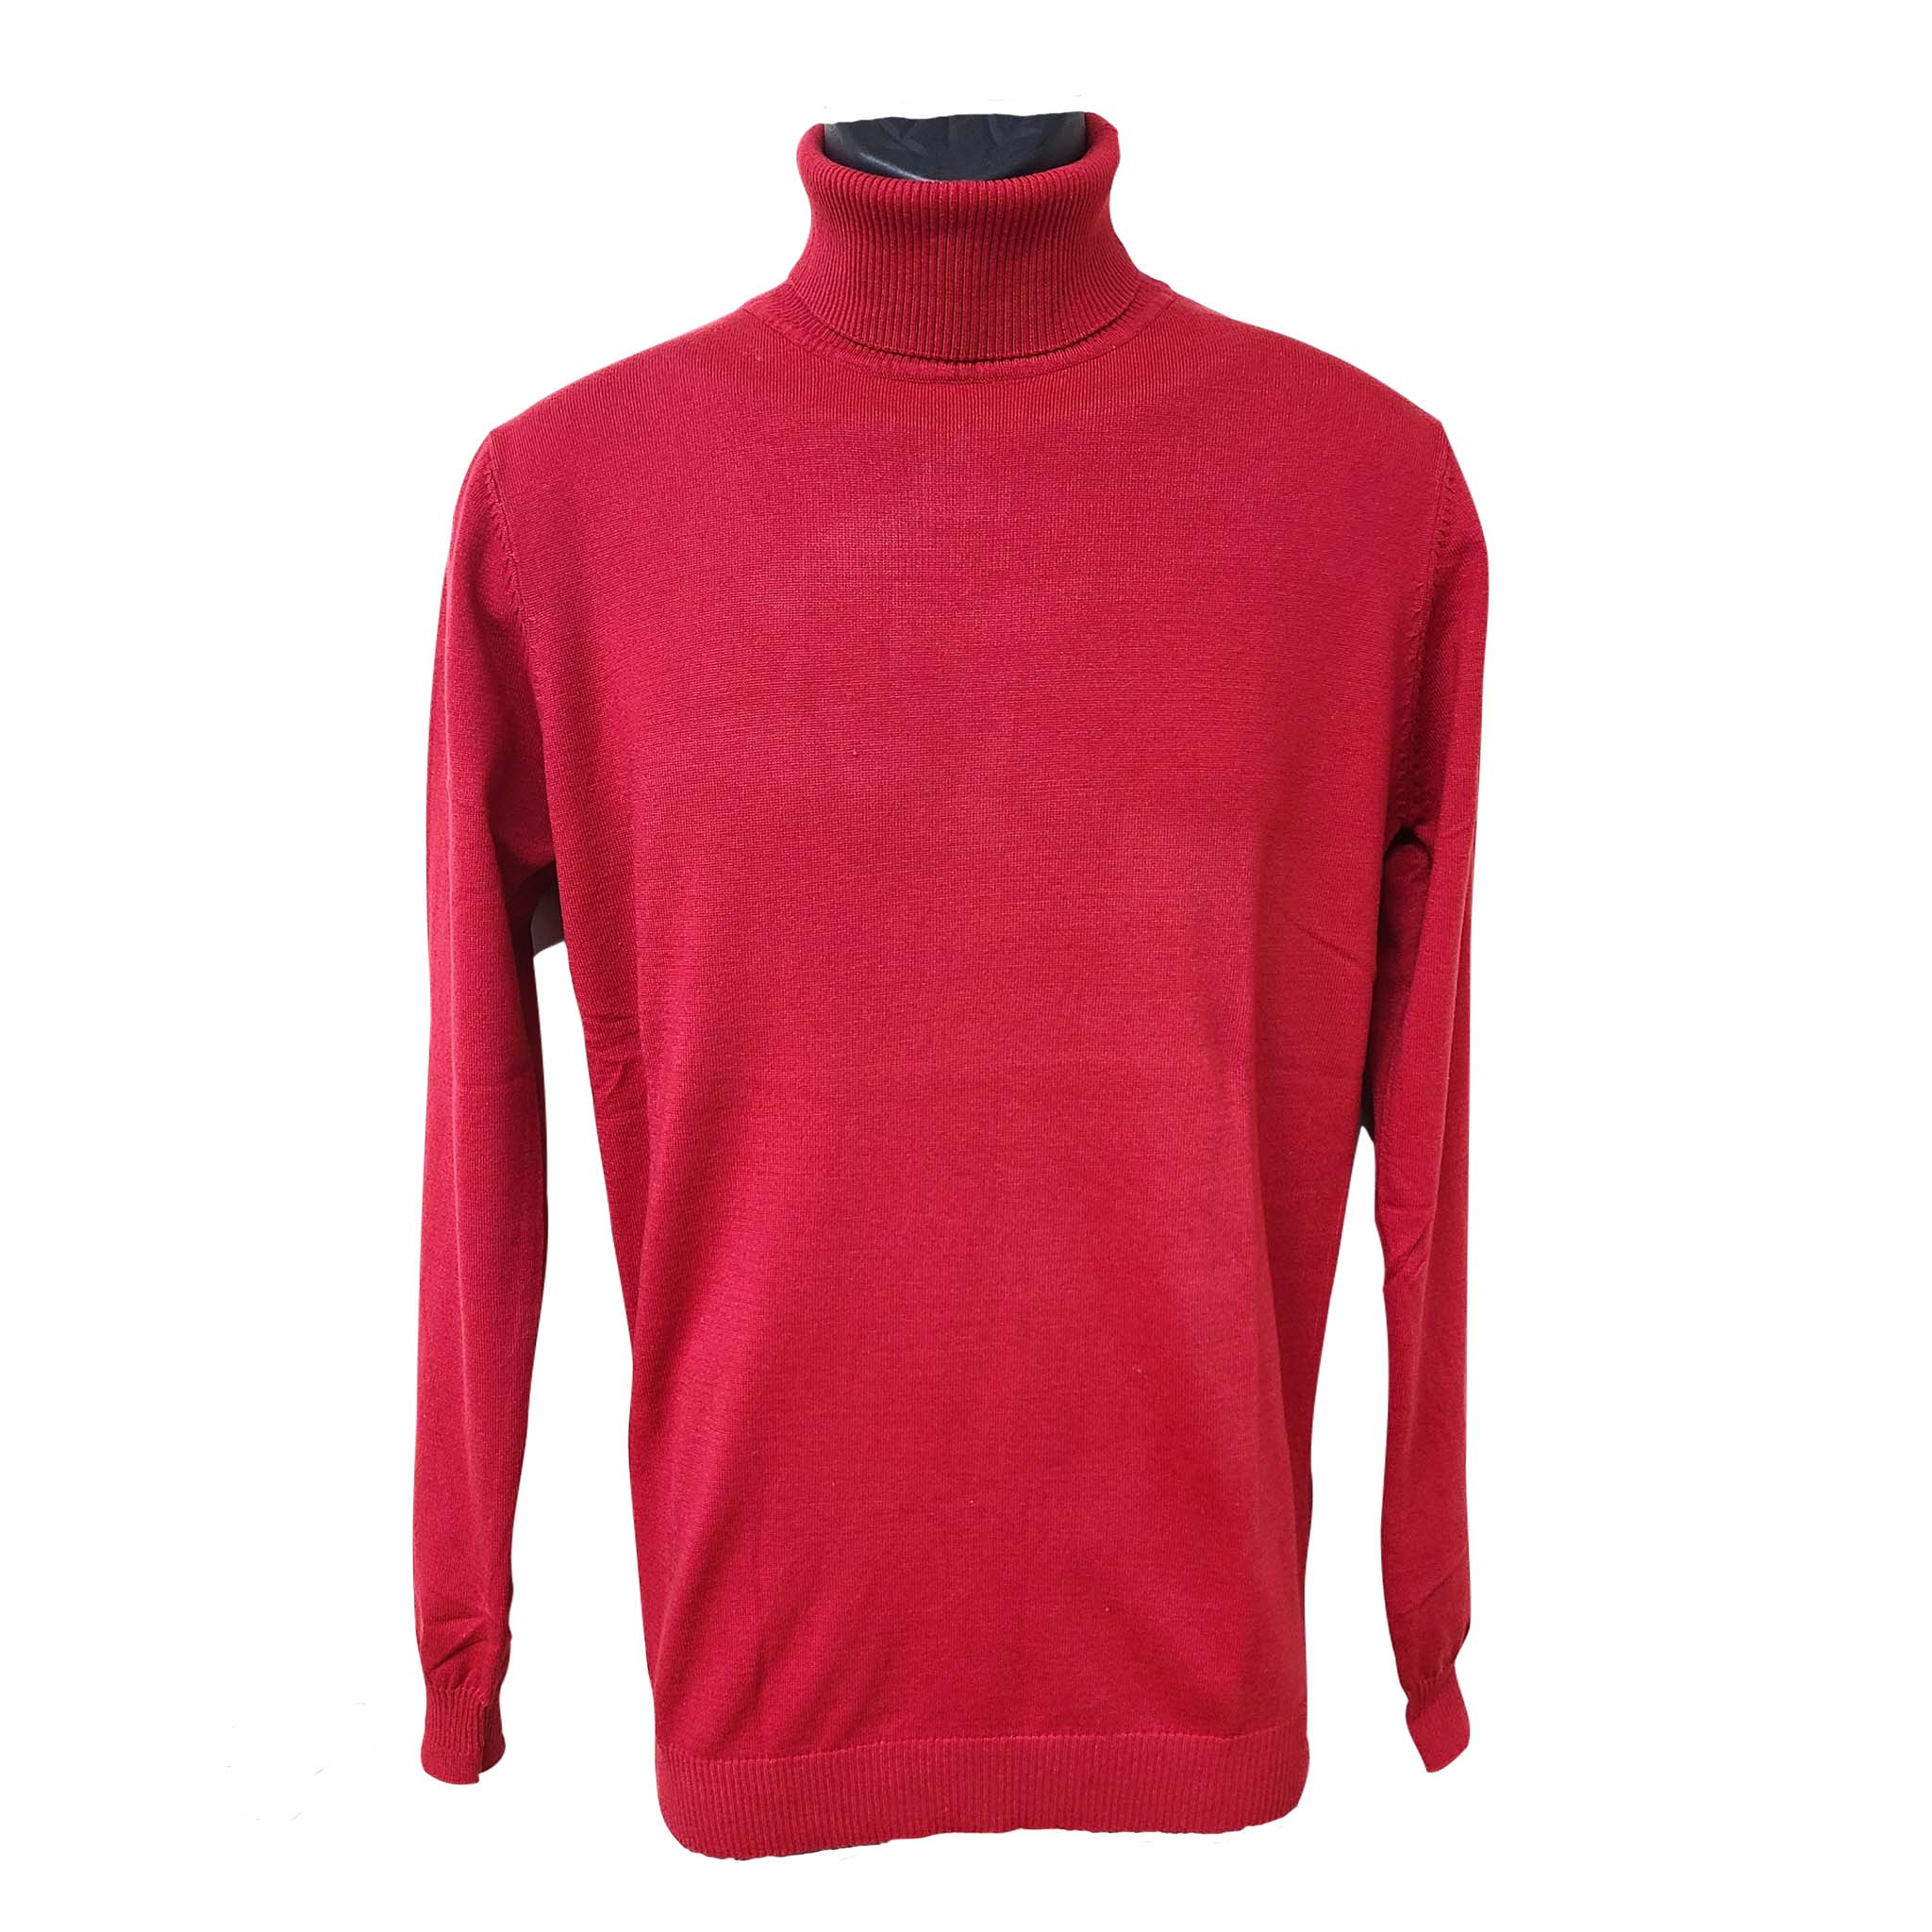 Men's Red Turtle Neck Sweater